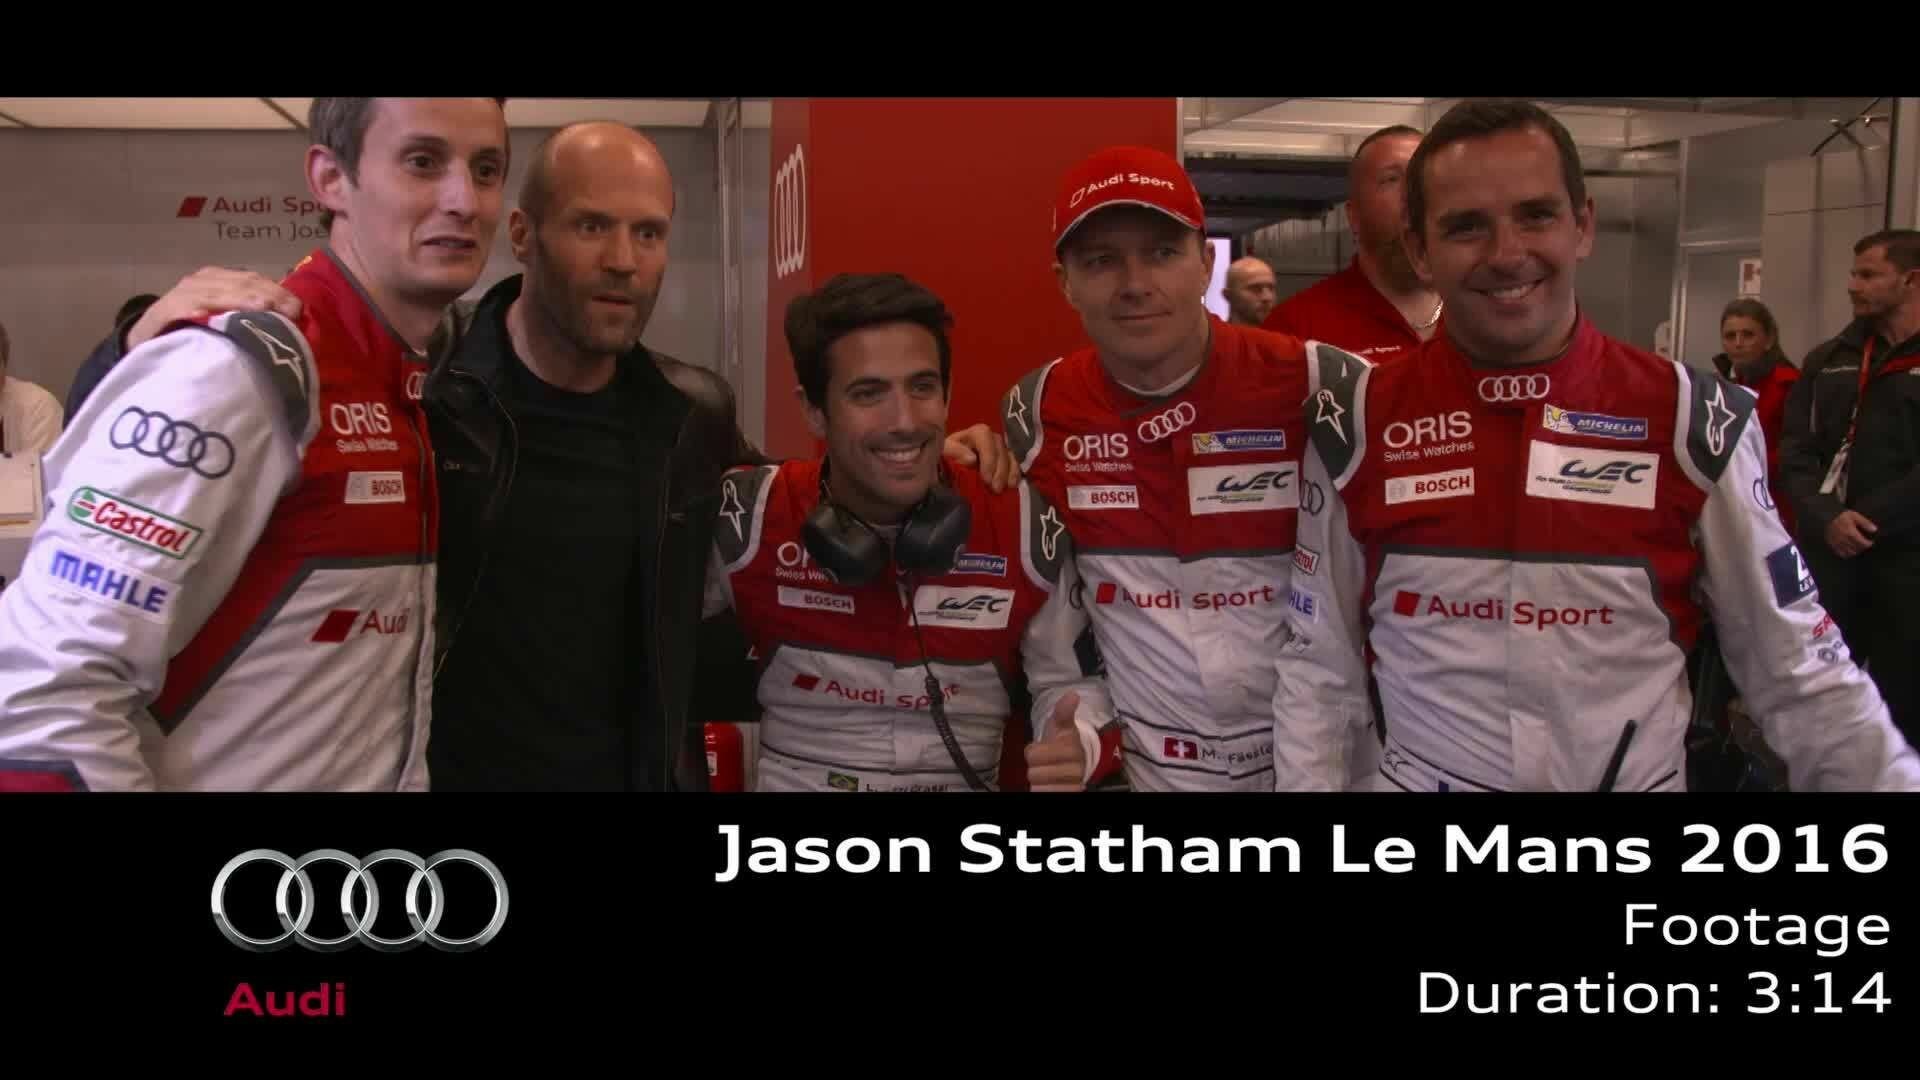 Jason Statham visits Audi at Le Mans - Footage